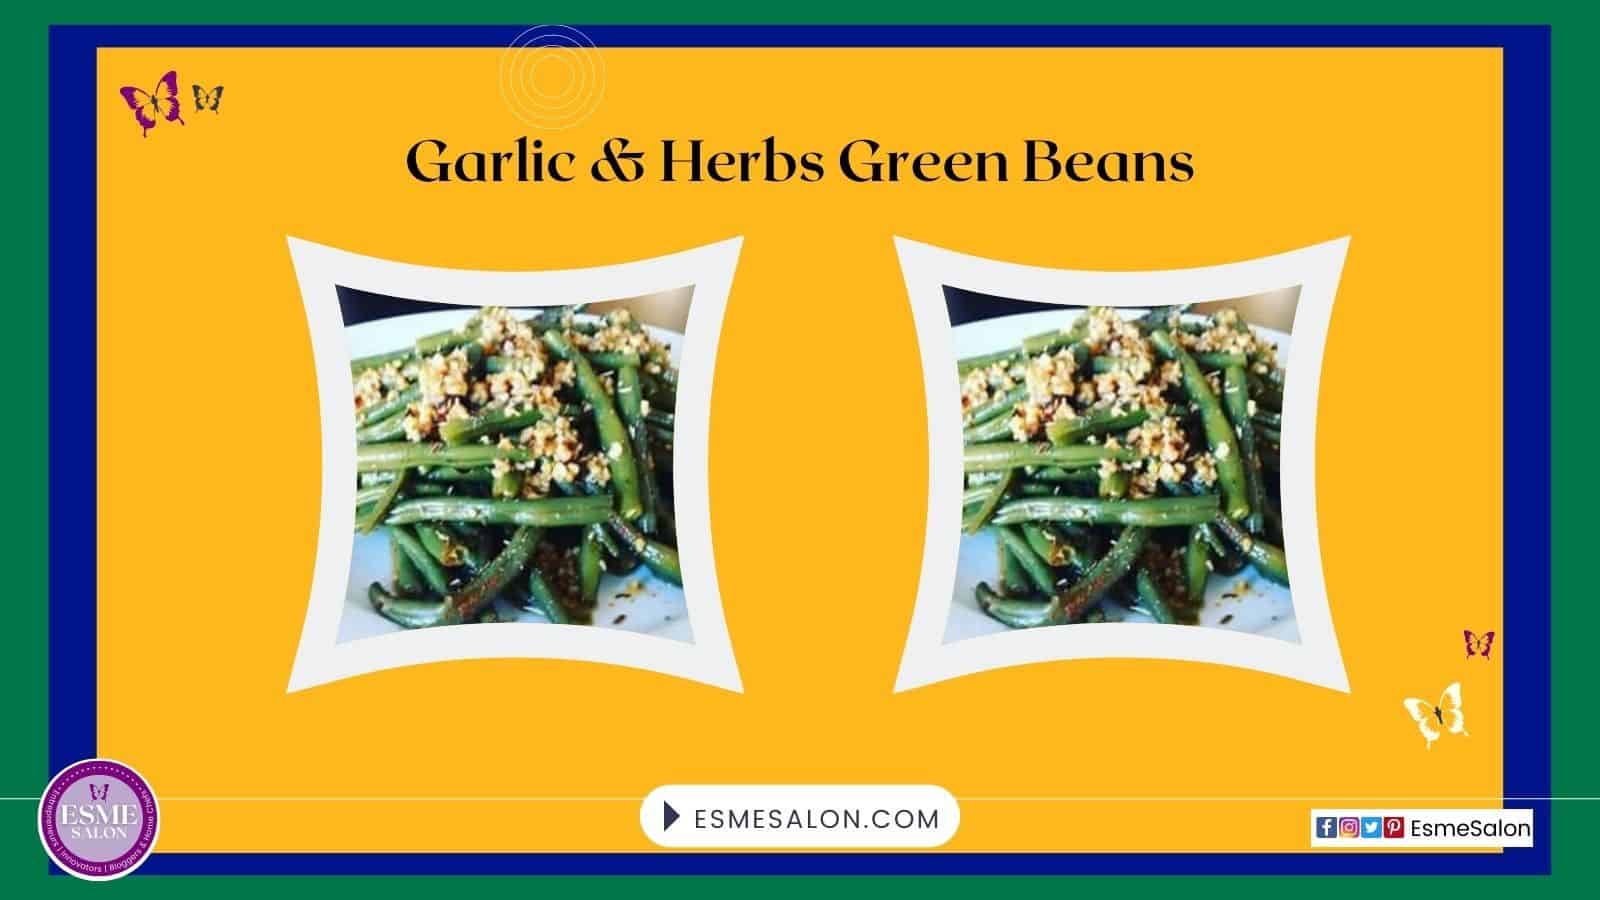 An image of Garlic & Herbs Green Beans Side Dish